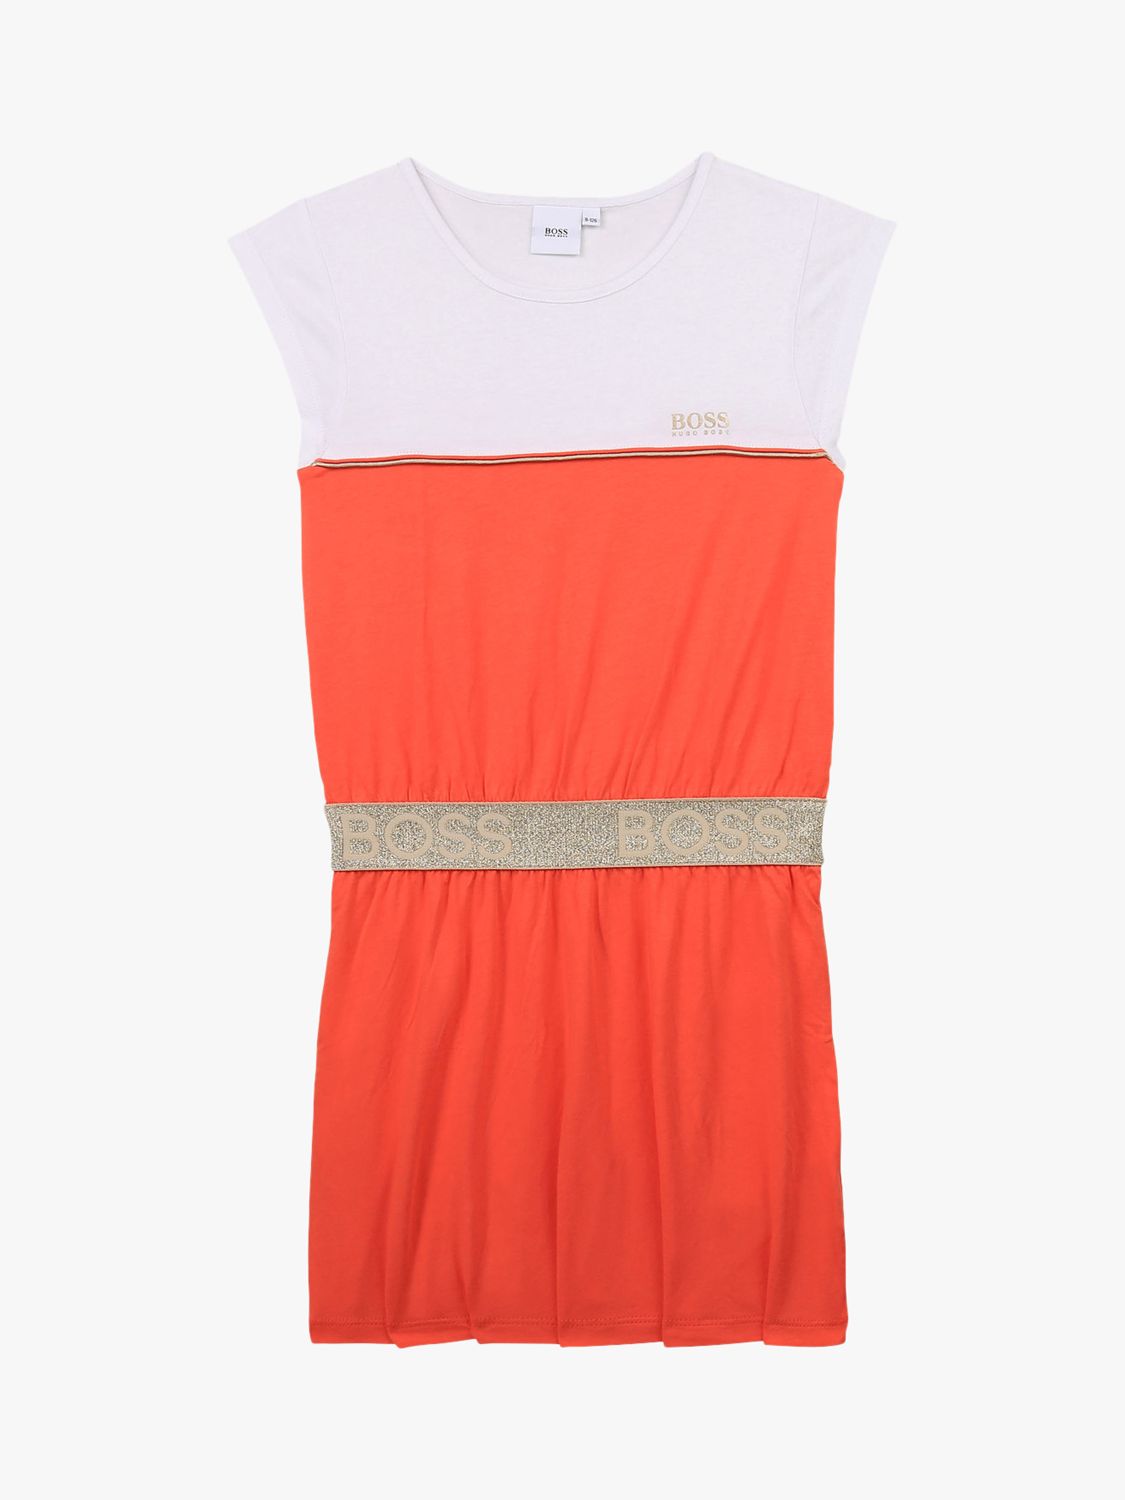 BOSS Kids' Modal & Cotton Jersey Dress, Peach, 5 years